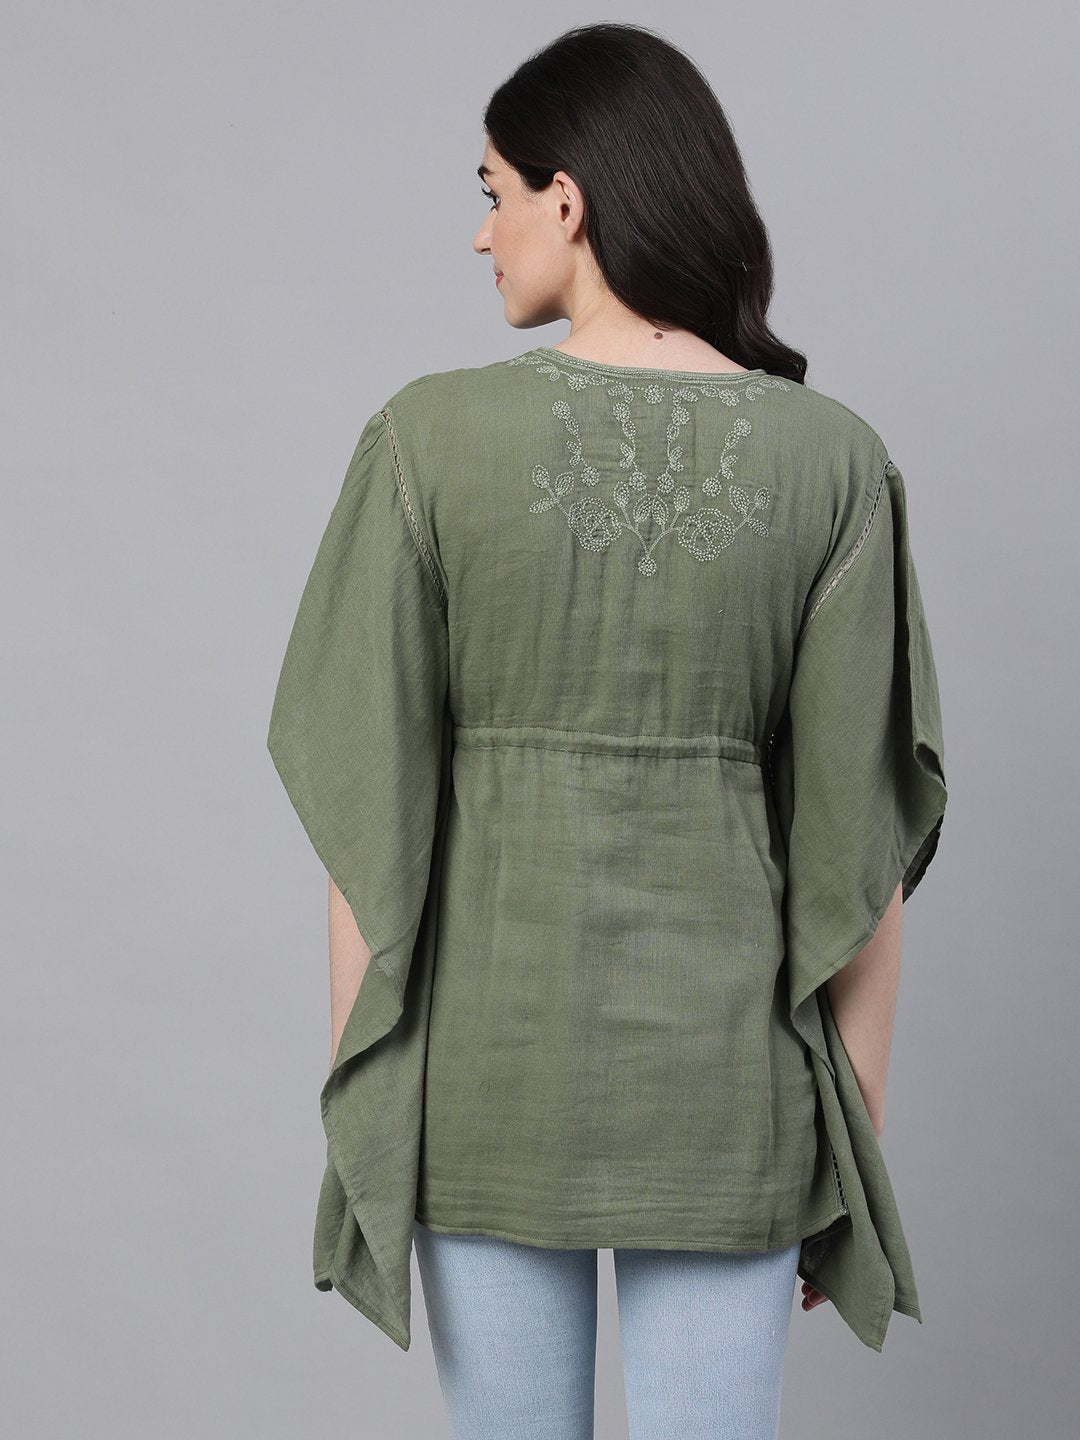 Ishin Women's Cotton Olive Green Embroidered Waist Tie-Up Kaftan Top